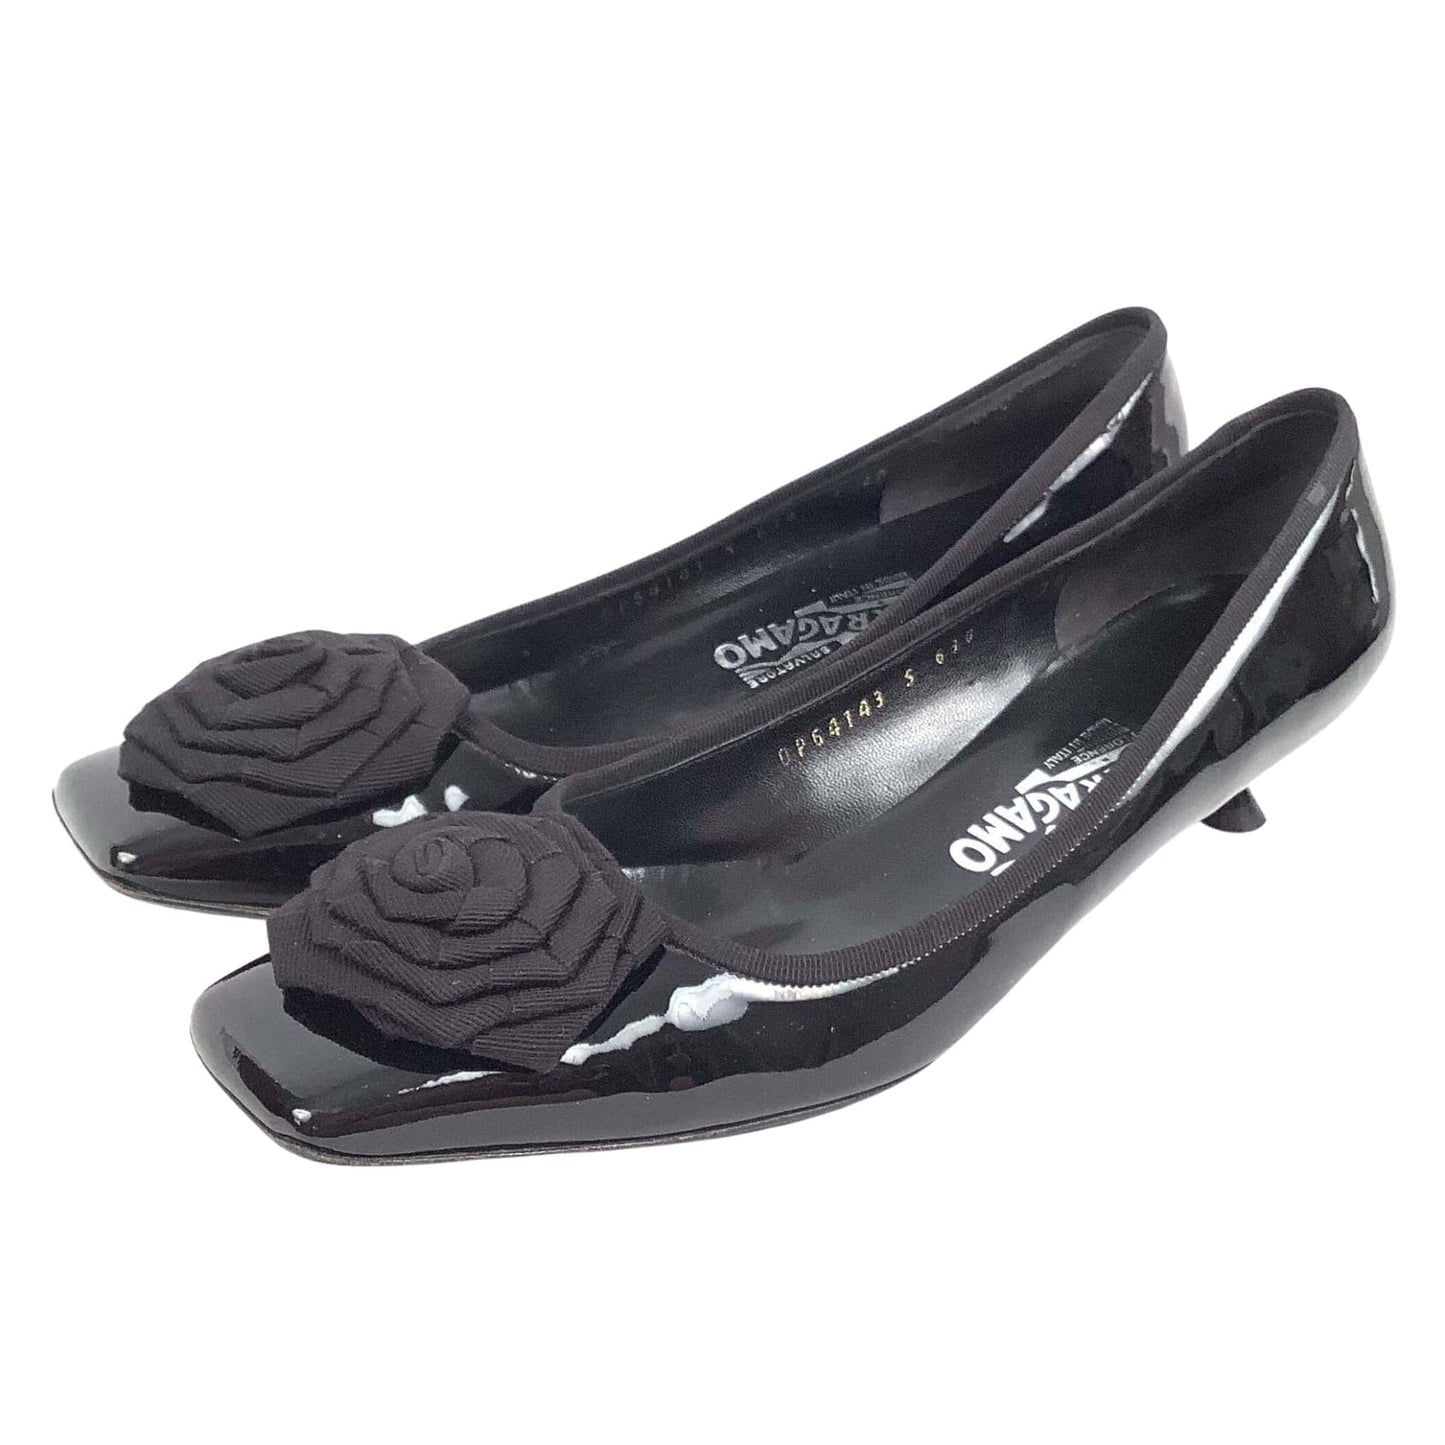 1990s Ferragamo Heels 8.5 / Black / Vintage 1990s